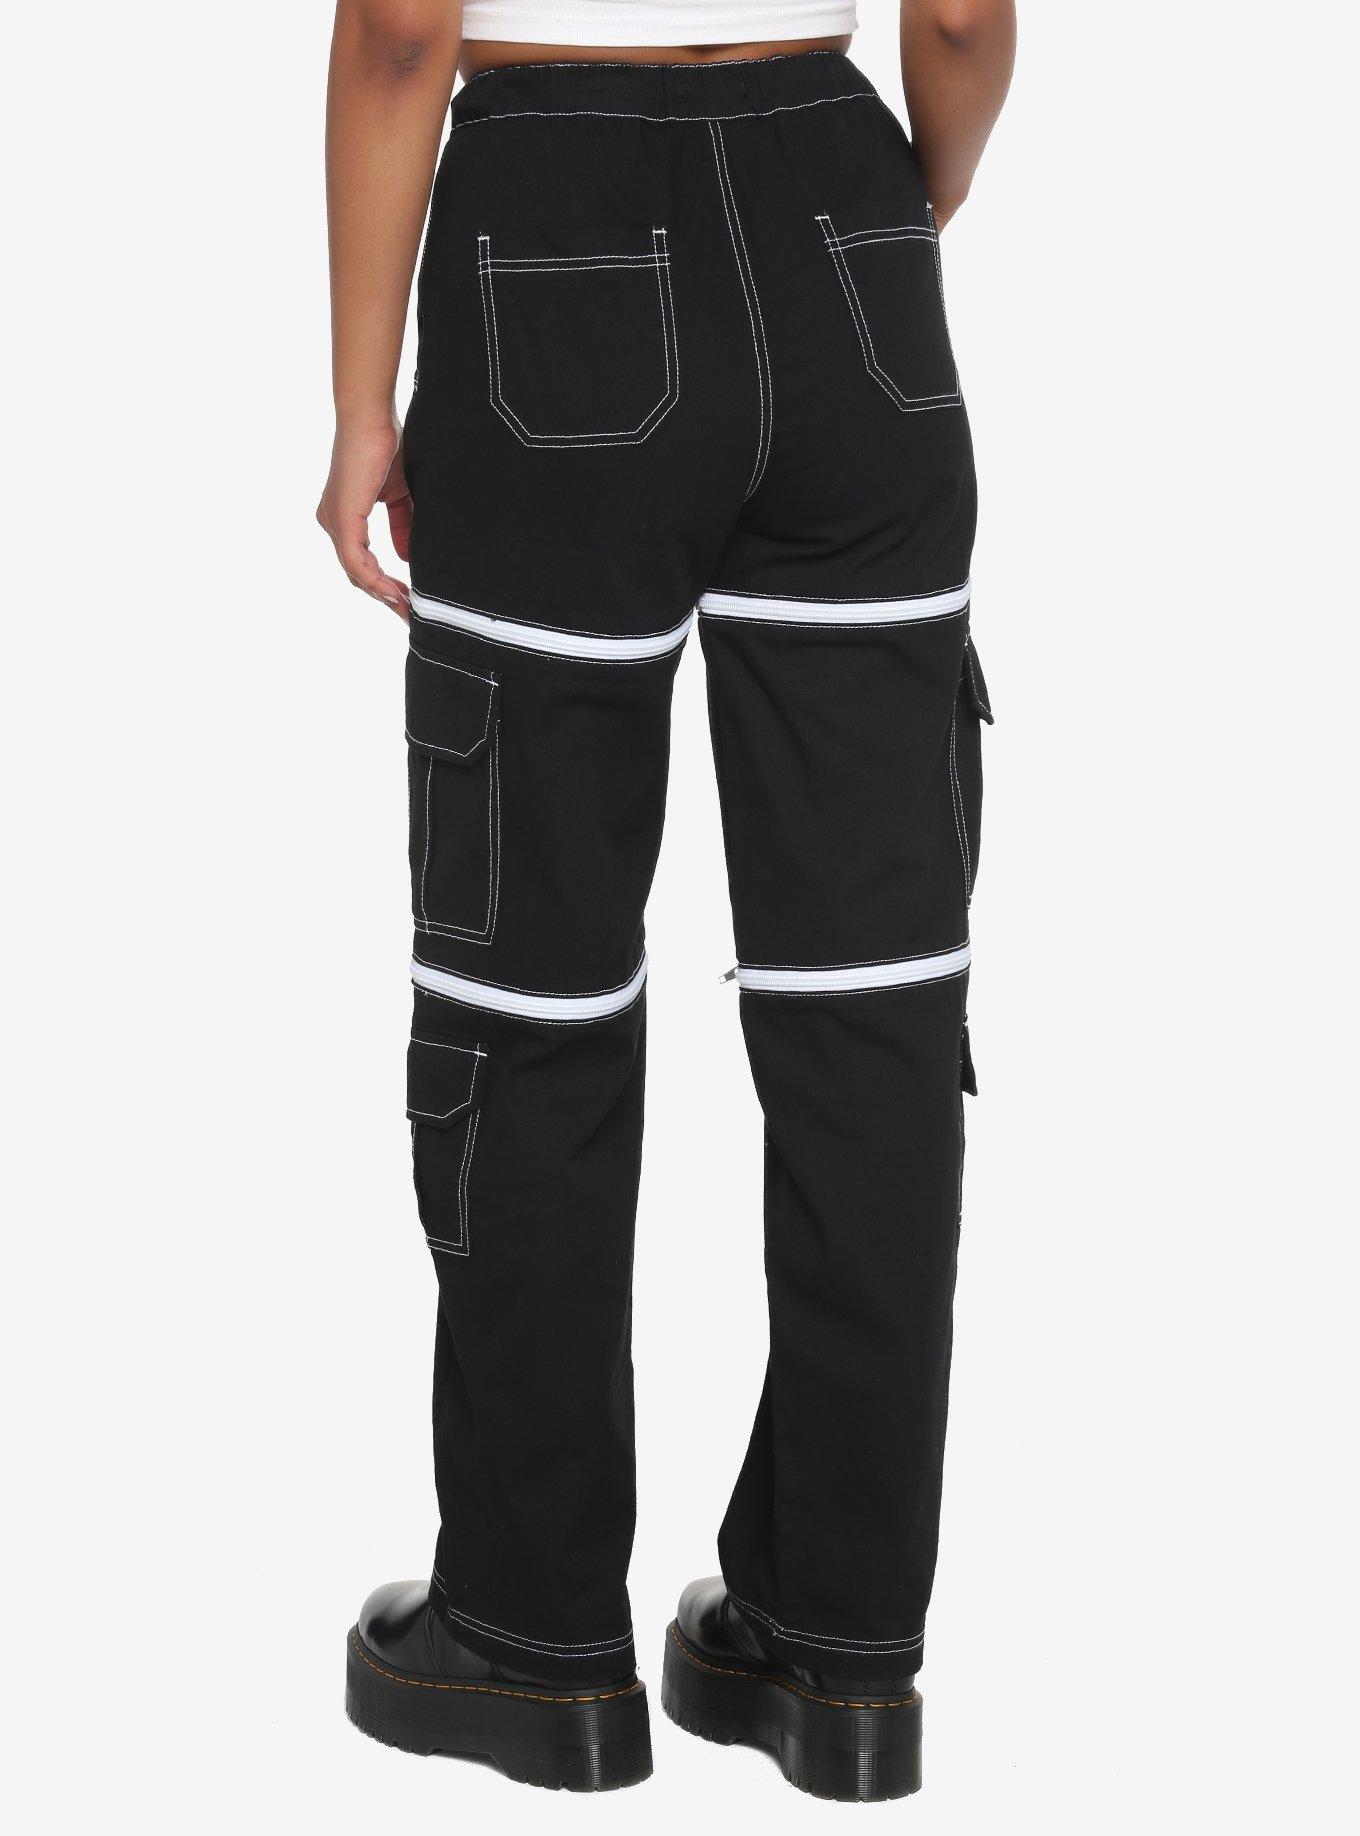 Black & White Zip-Off Carpenter Pants